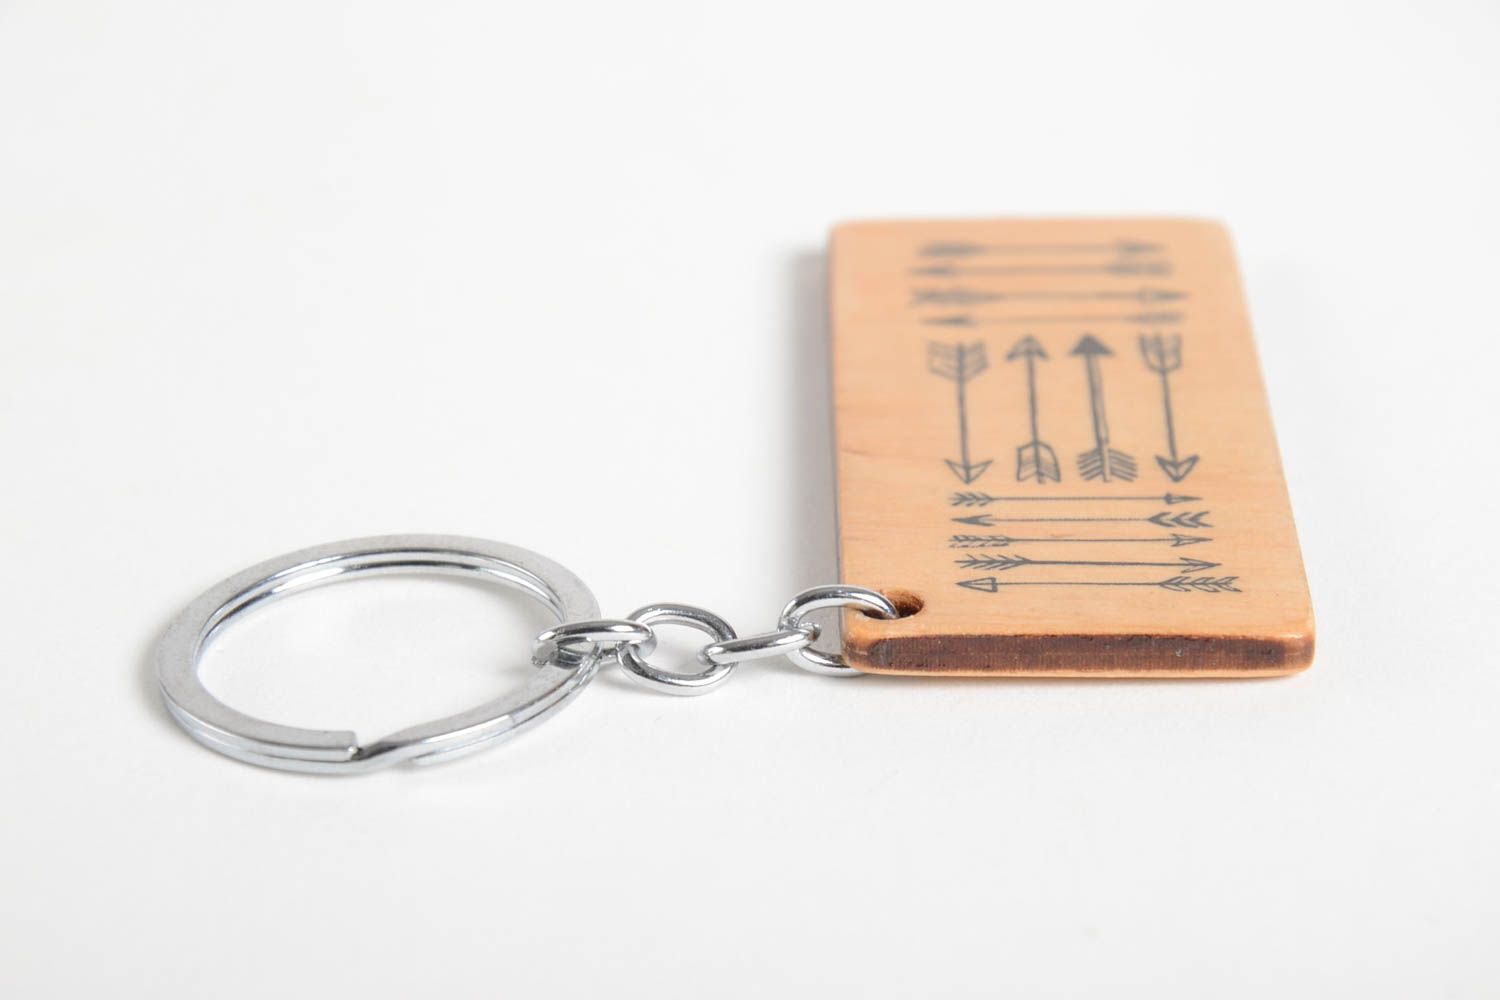 Handmade keychain unusual keychain designer accessory gift ideas wooden souvenir photo 5